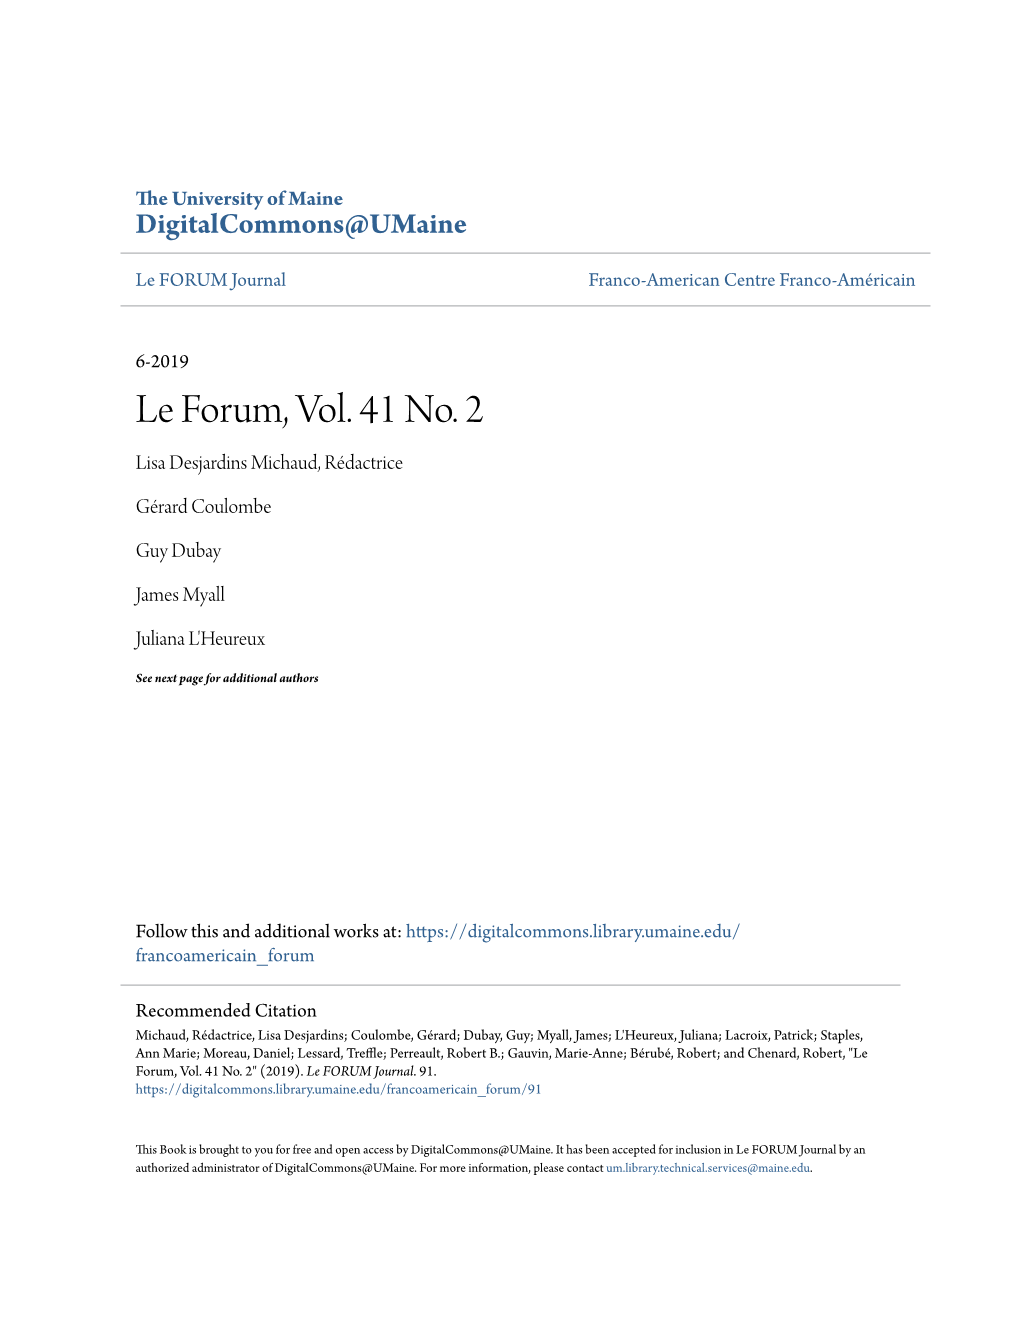 Le Forum, Vol. 41 No. 2 Lisa Desjardins Michaud, Rédactrice